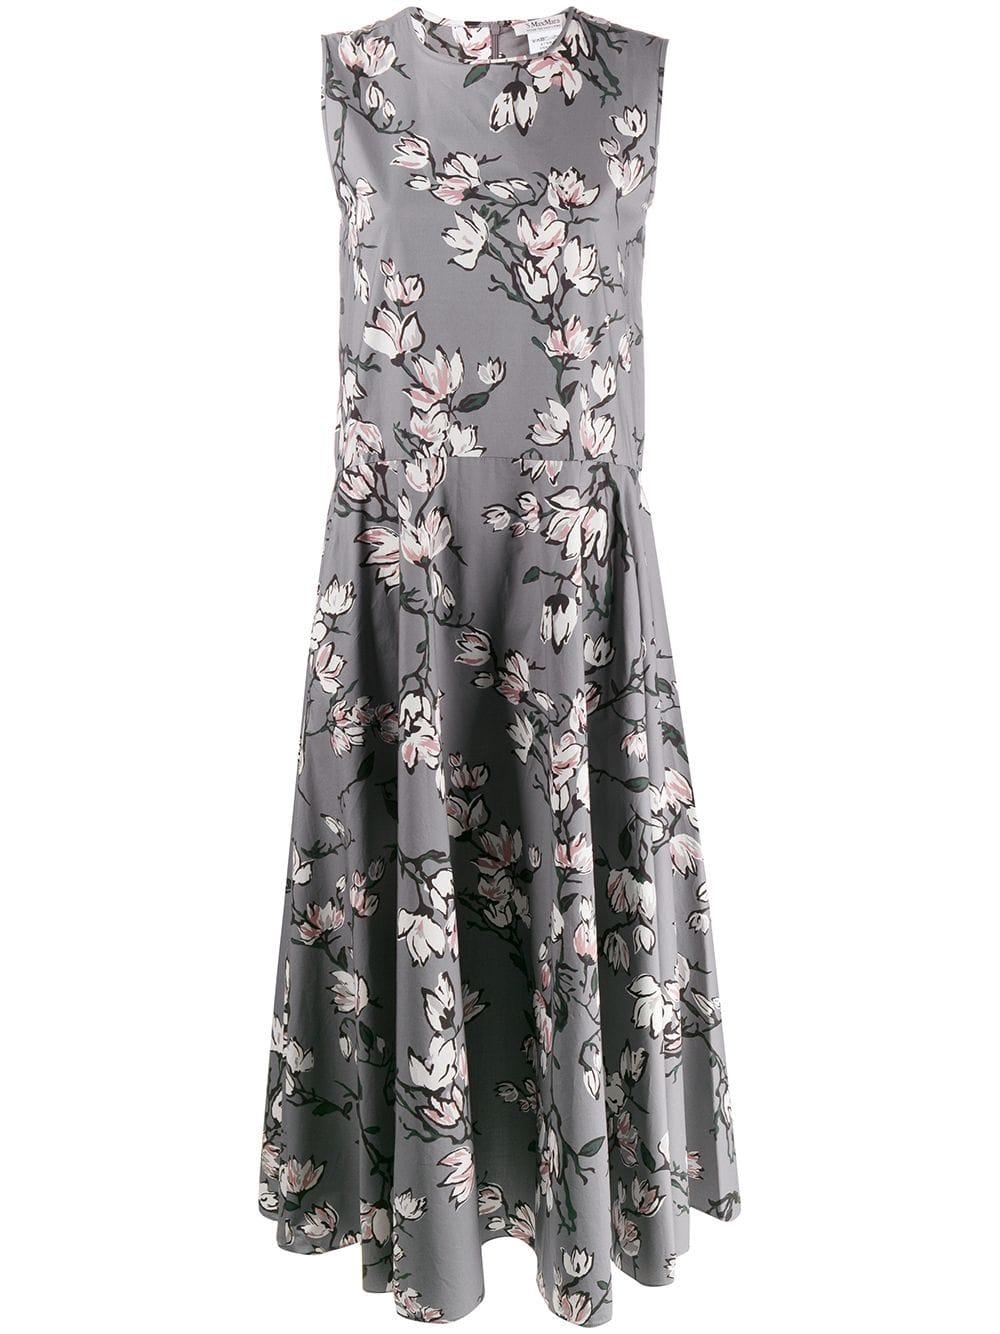 Max Mara Cotton Floral Print Midi Dress in Grey (Grey) - Lyst